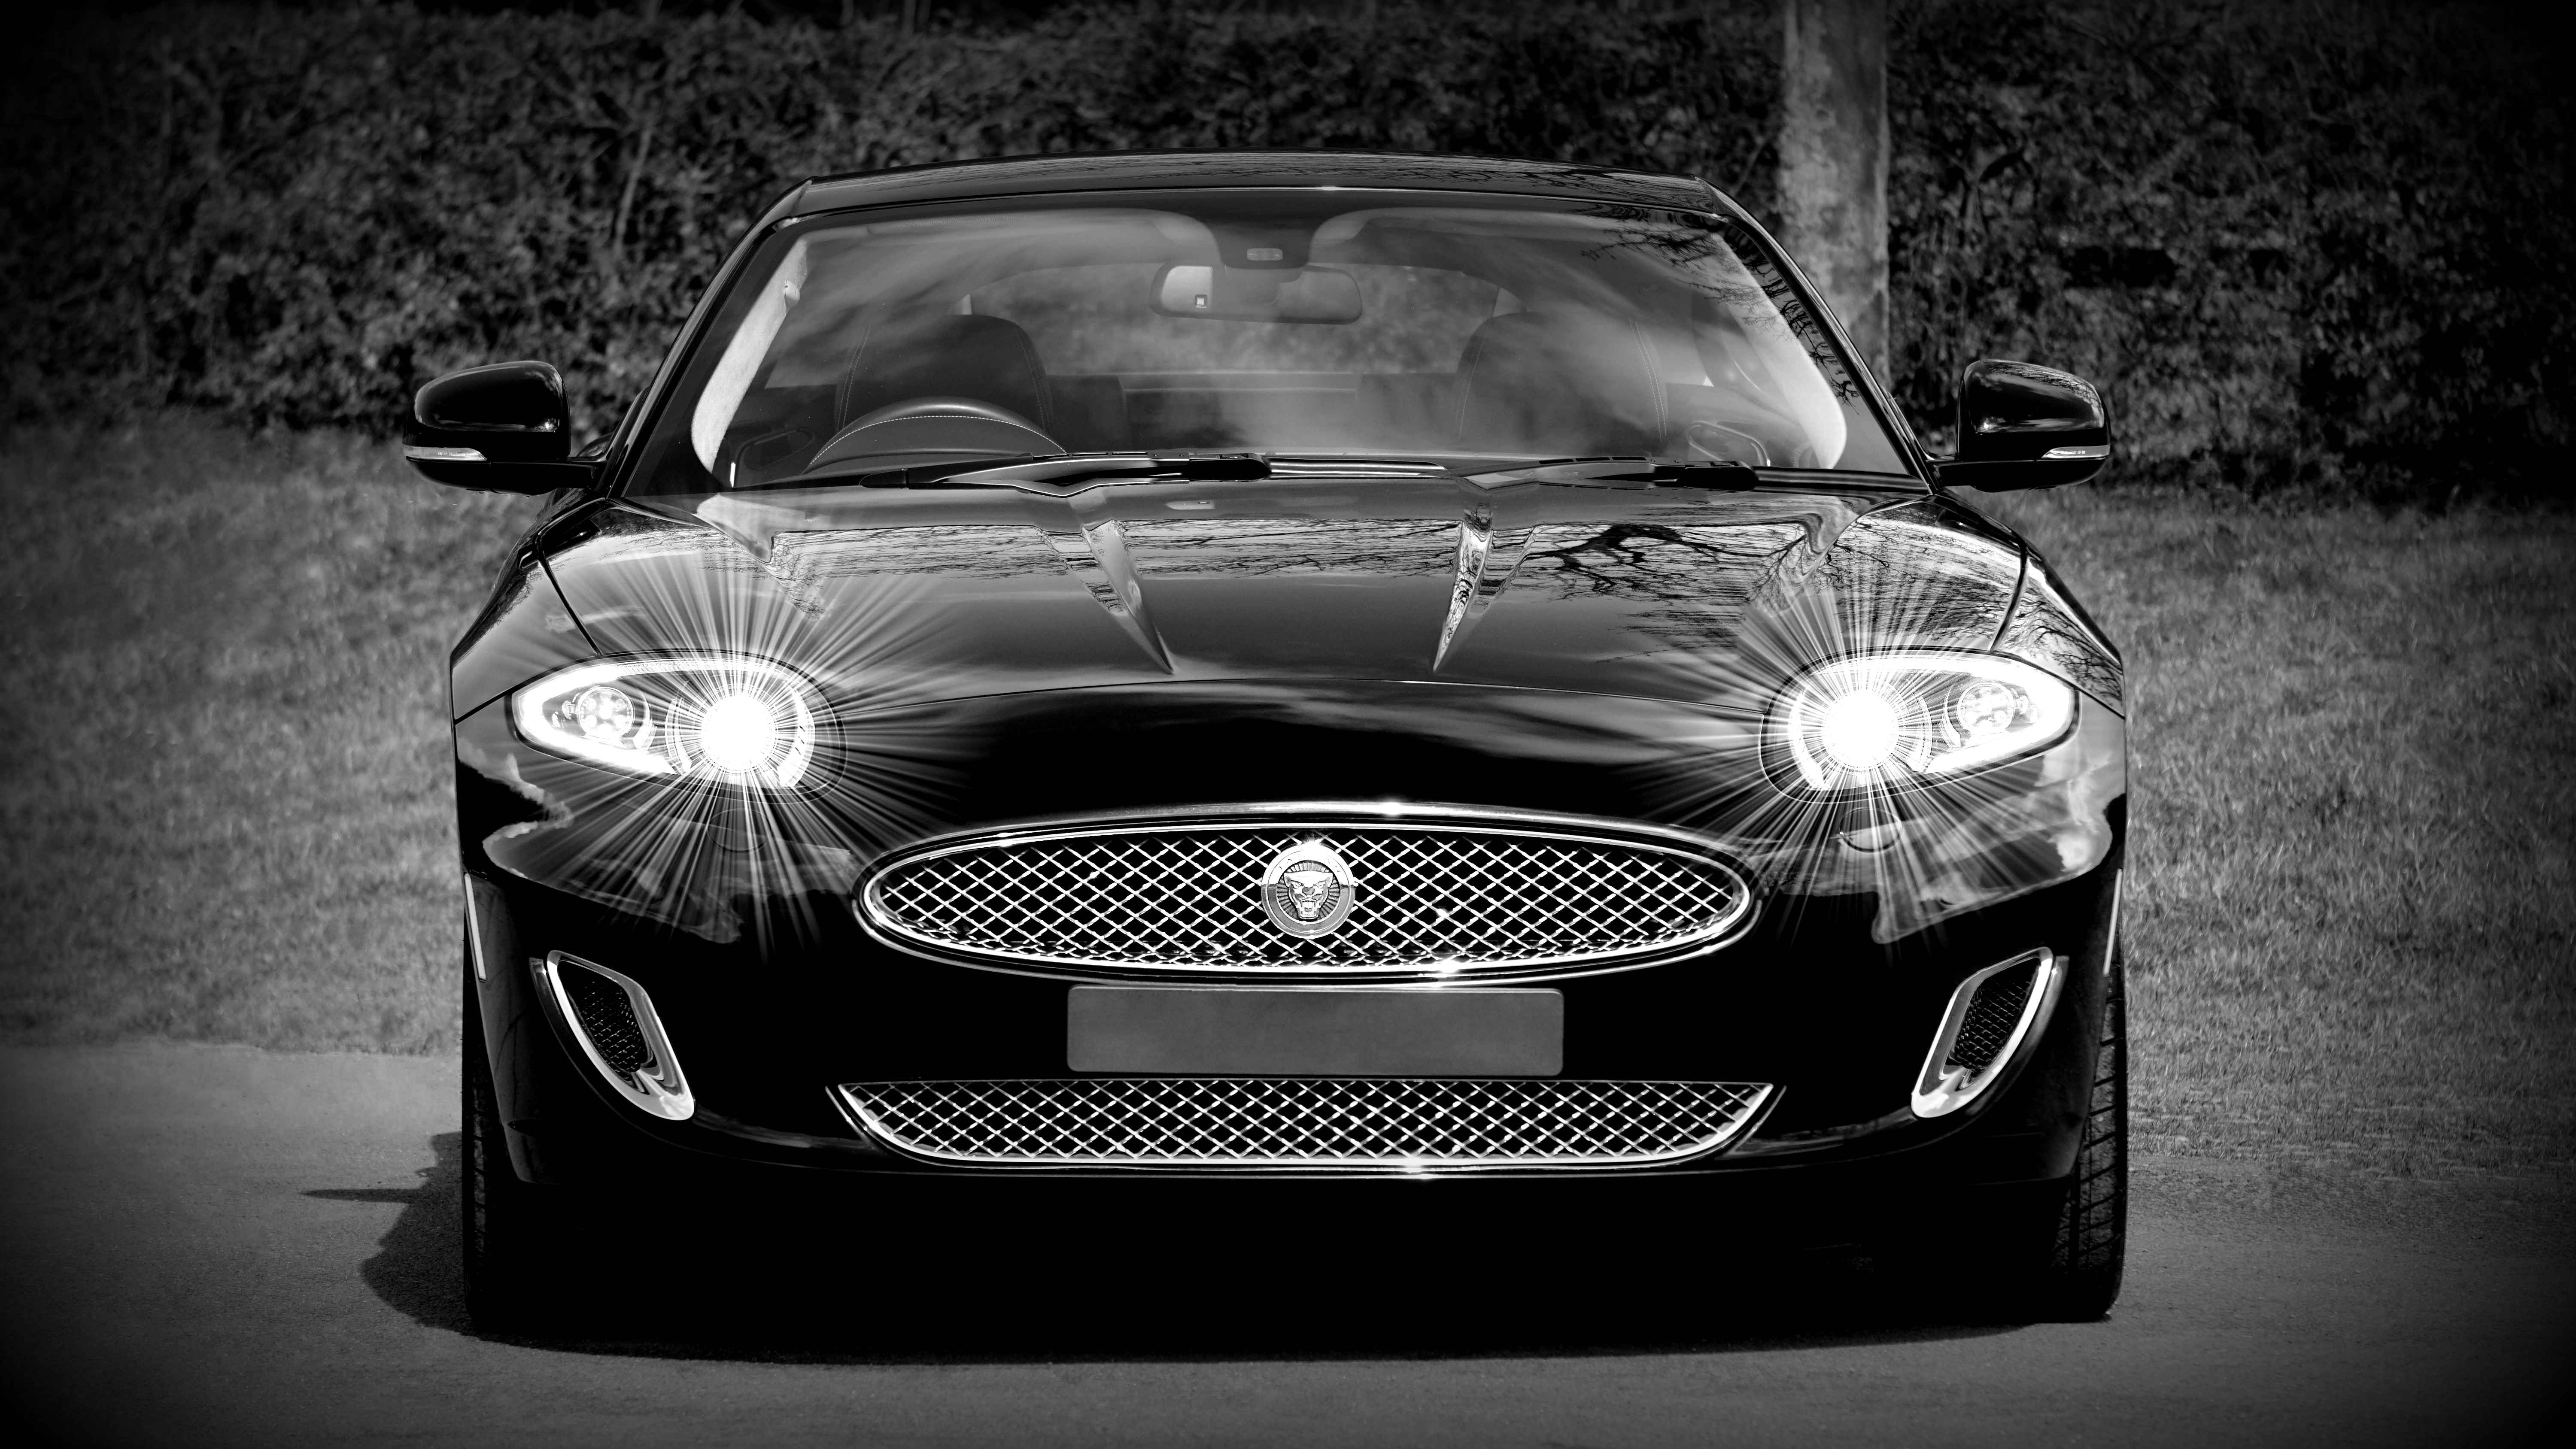 Free photo Jaguar XK in monochrome photo